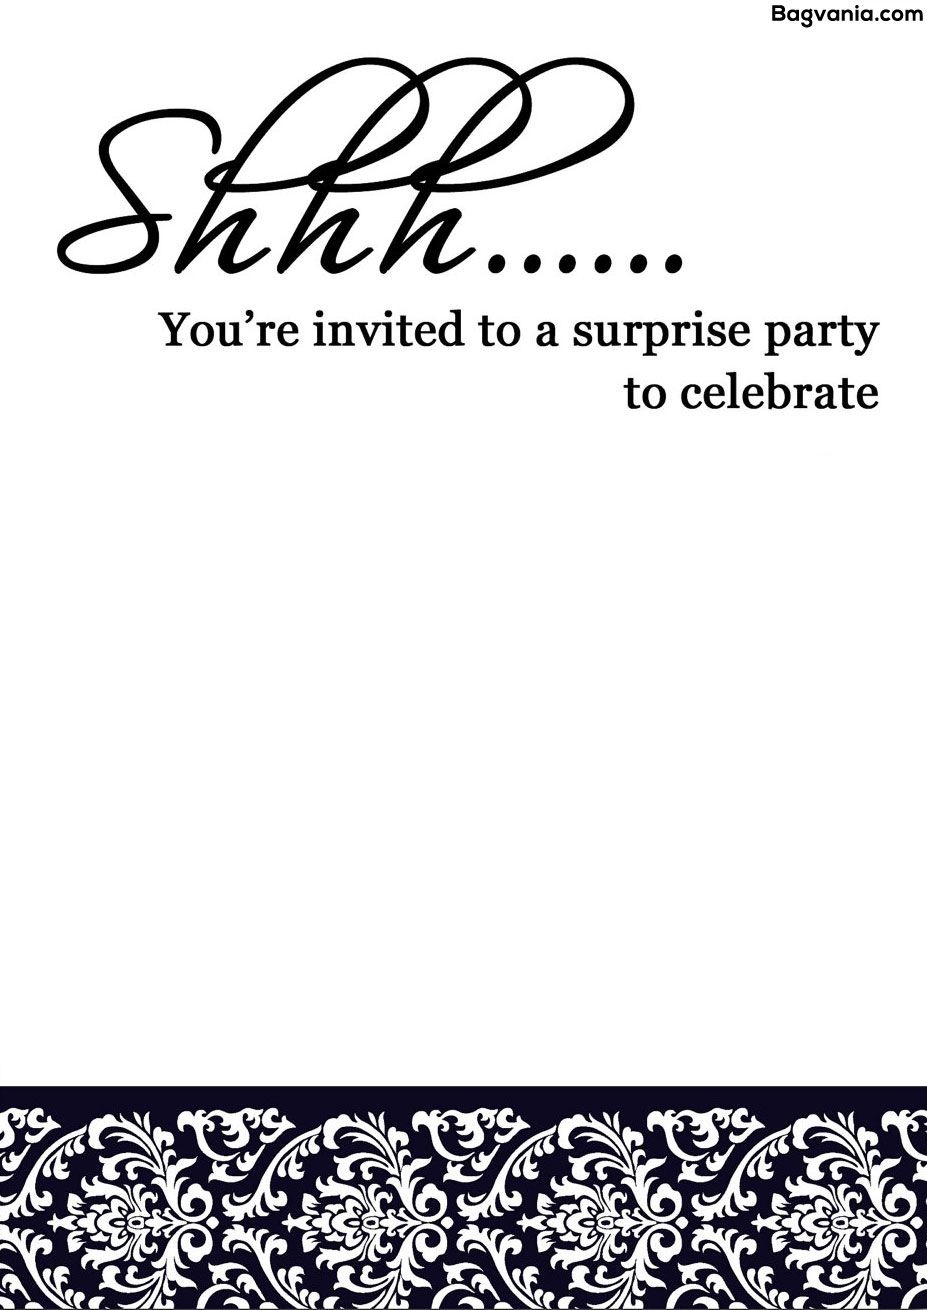 Free Printable Surprise Birthday Invitations – Bagvania Free - Free Printable Surprise Party Invitation Templates